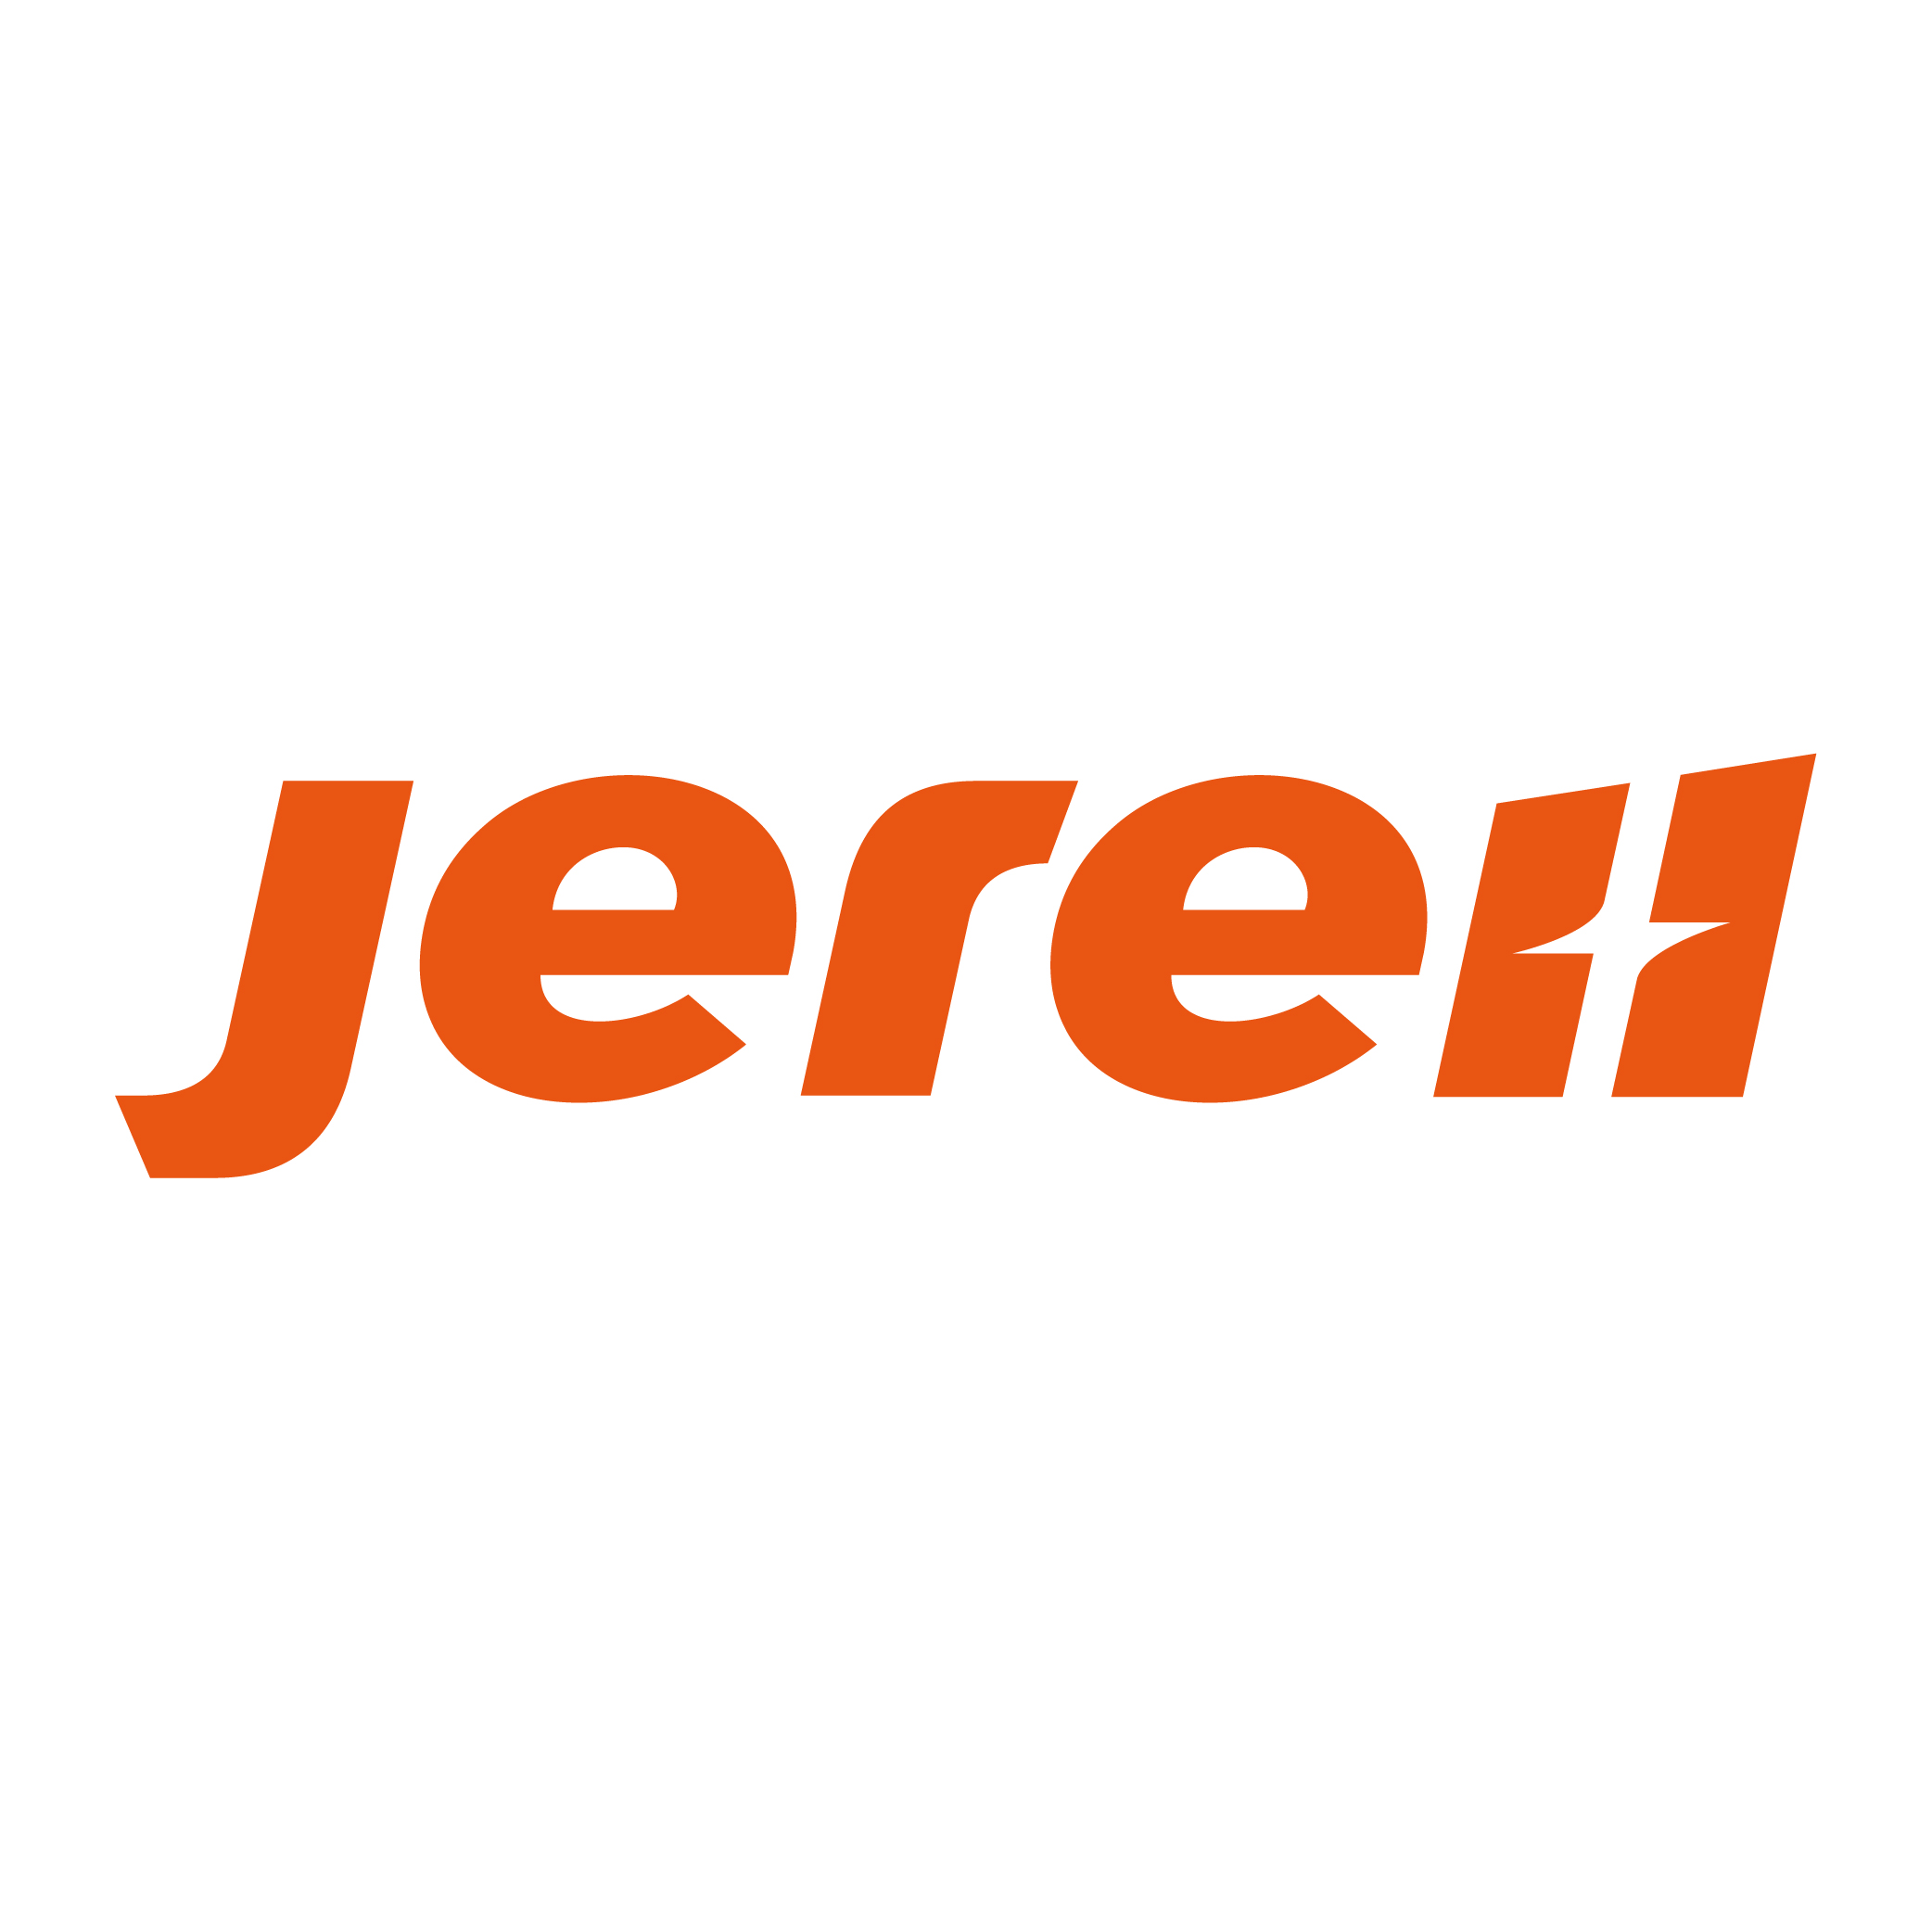 Jereh Group